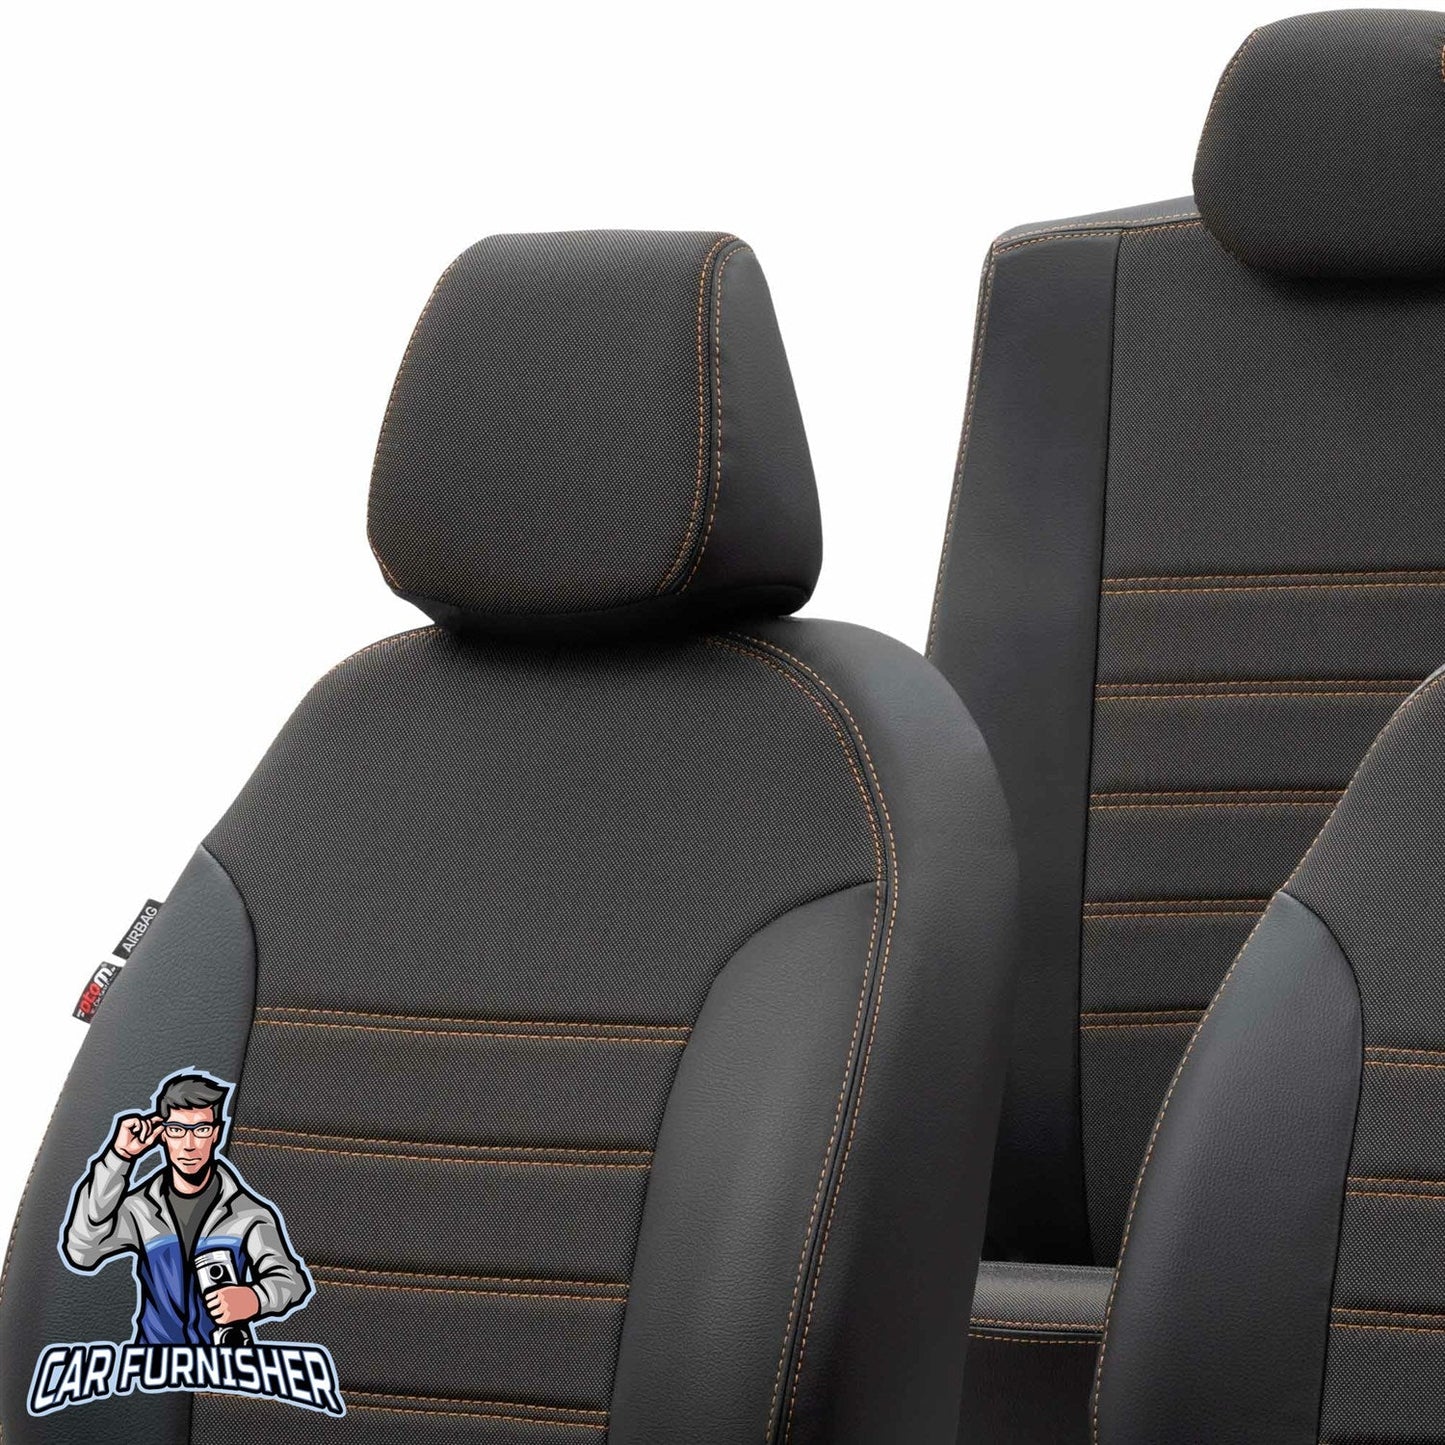 Volkswagen Golf Seat Cover Paris Leather & Jacquard Design Beige Leather & Jacquard Fabric